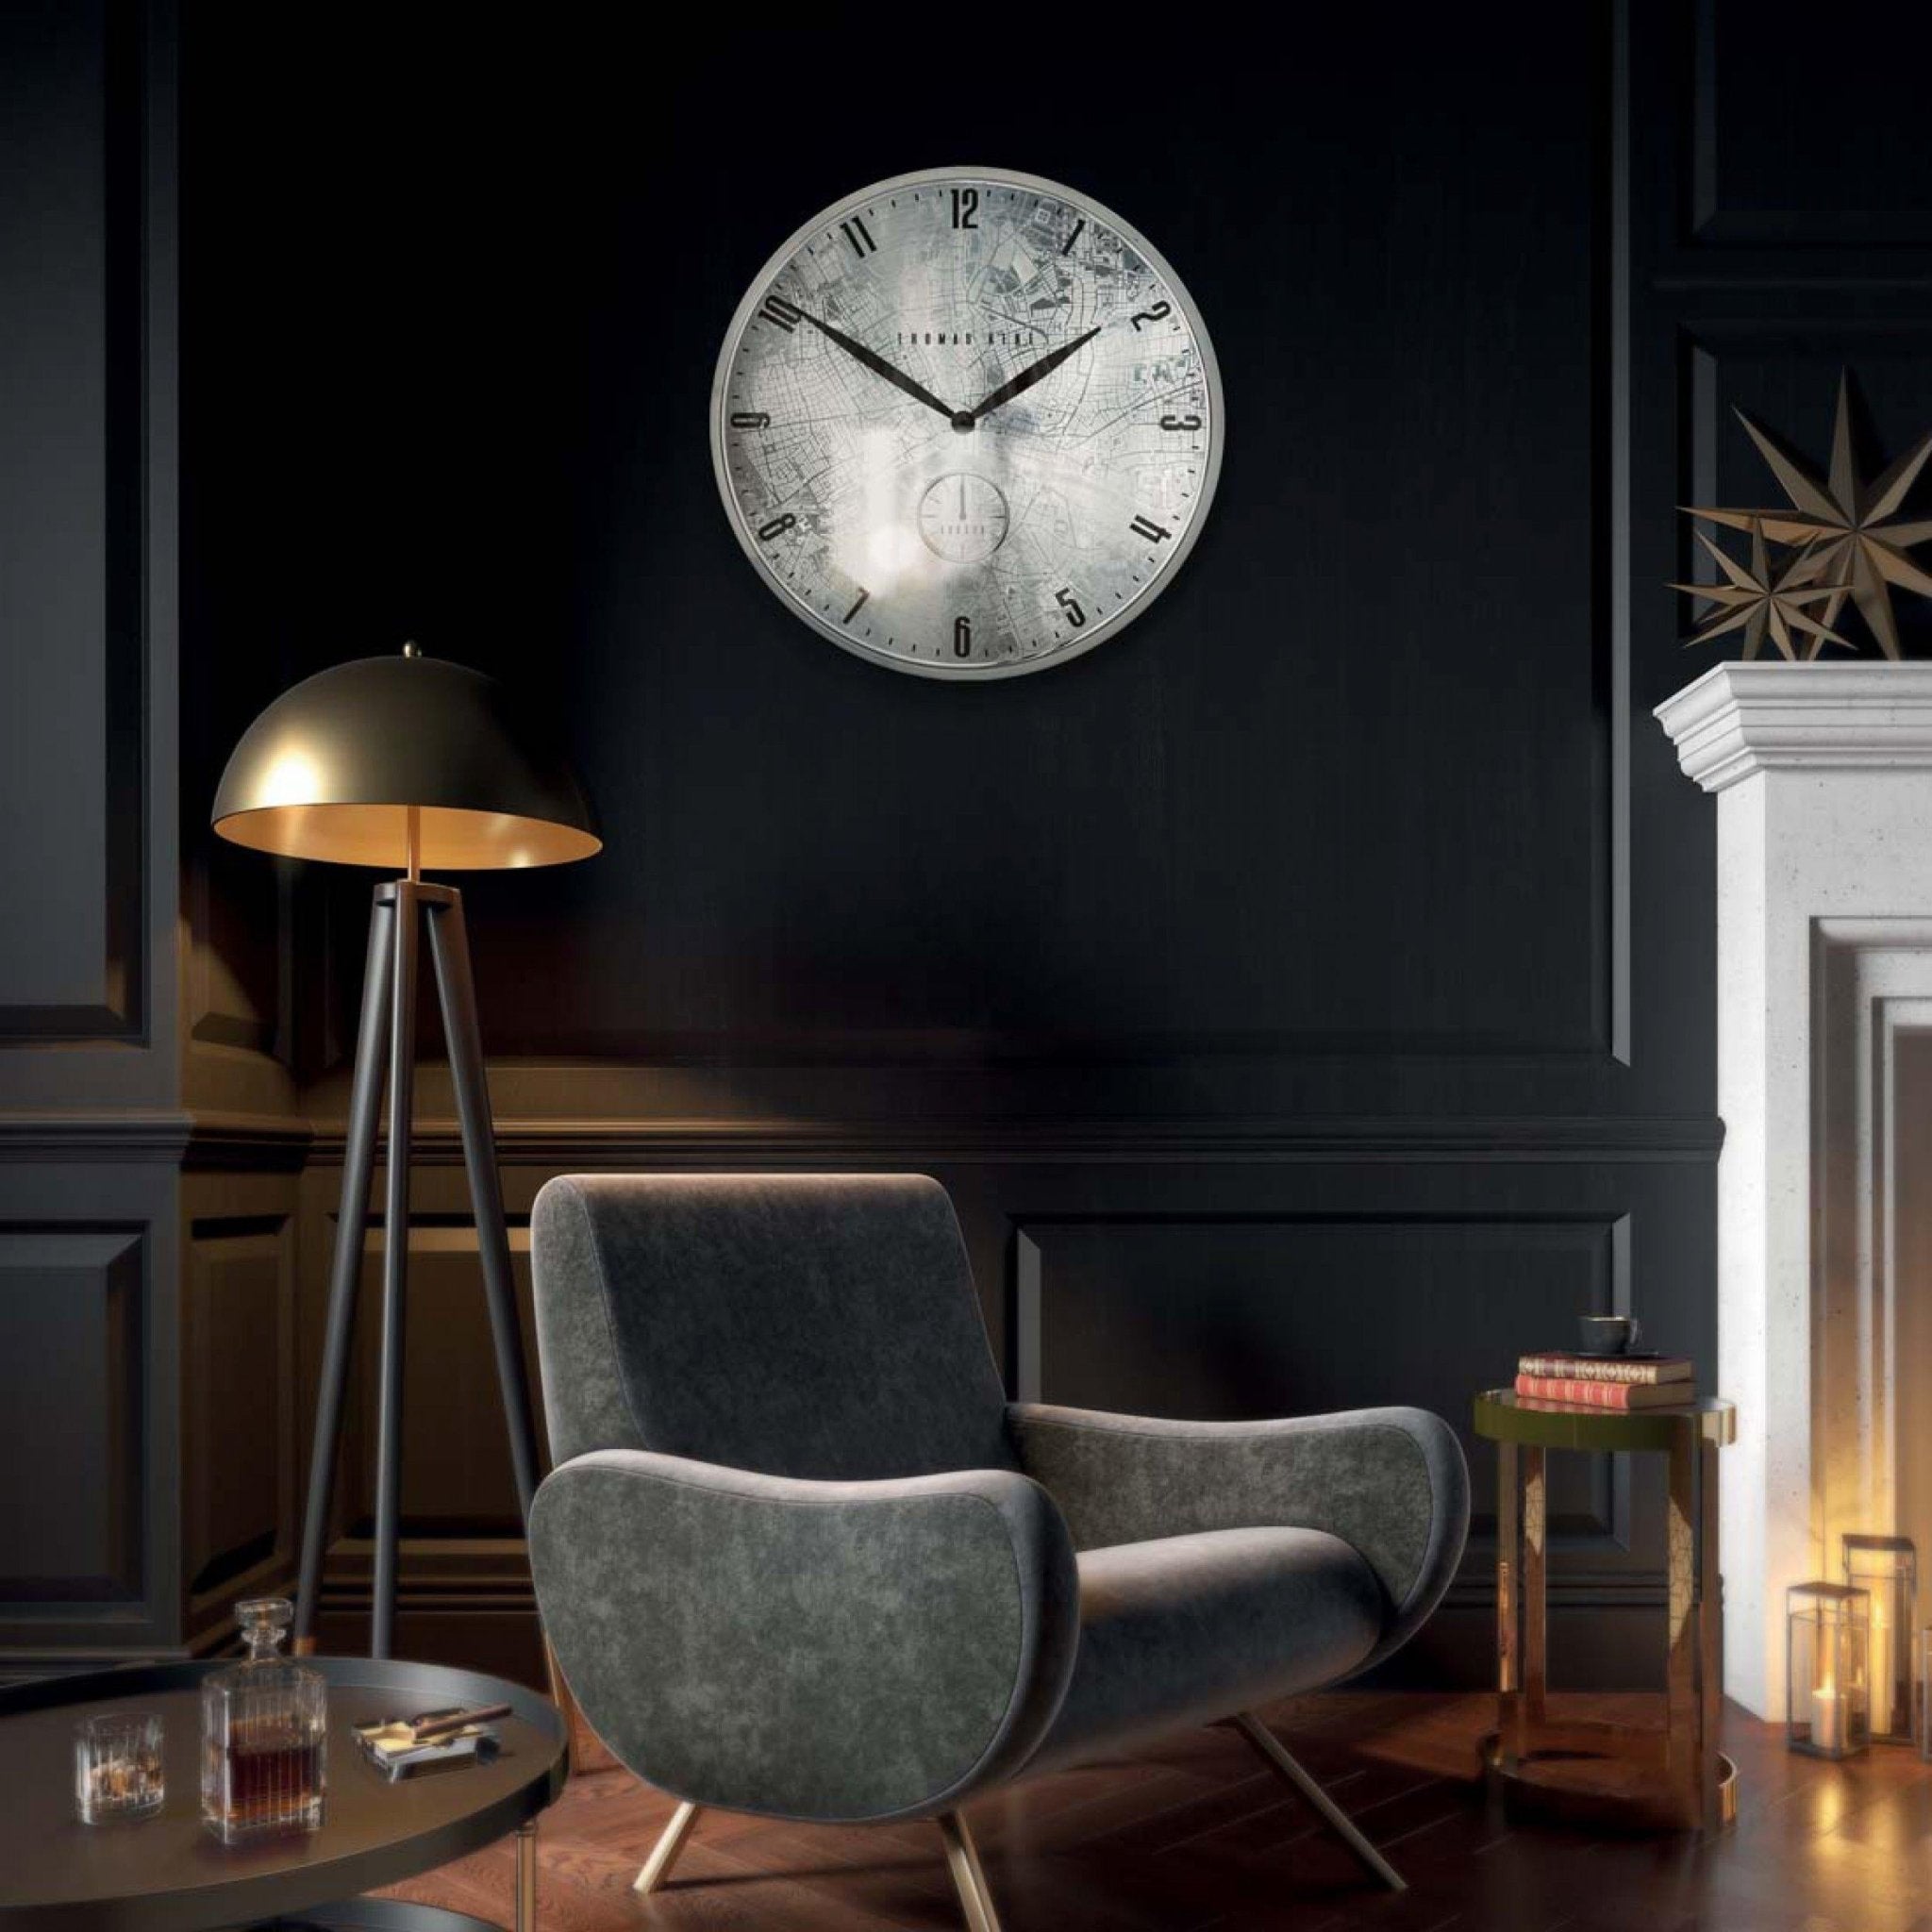 Thomas Kent Londoner Timekeeper Grand Clock - (71cm/28") - Duck Barn Interiors